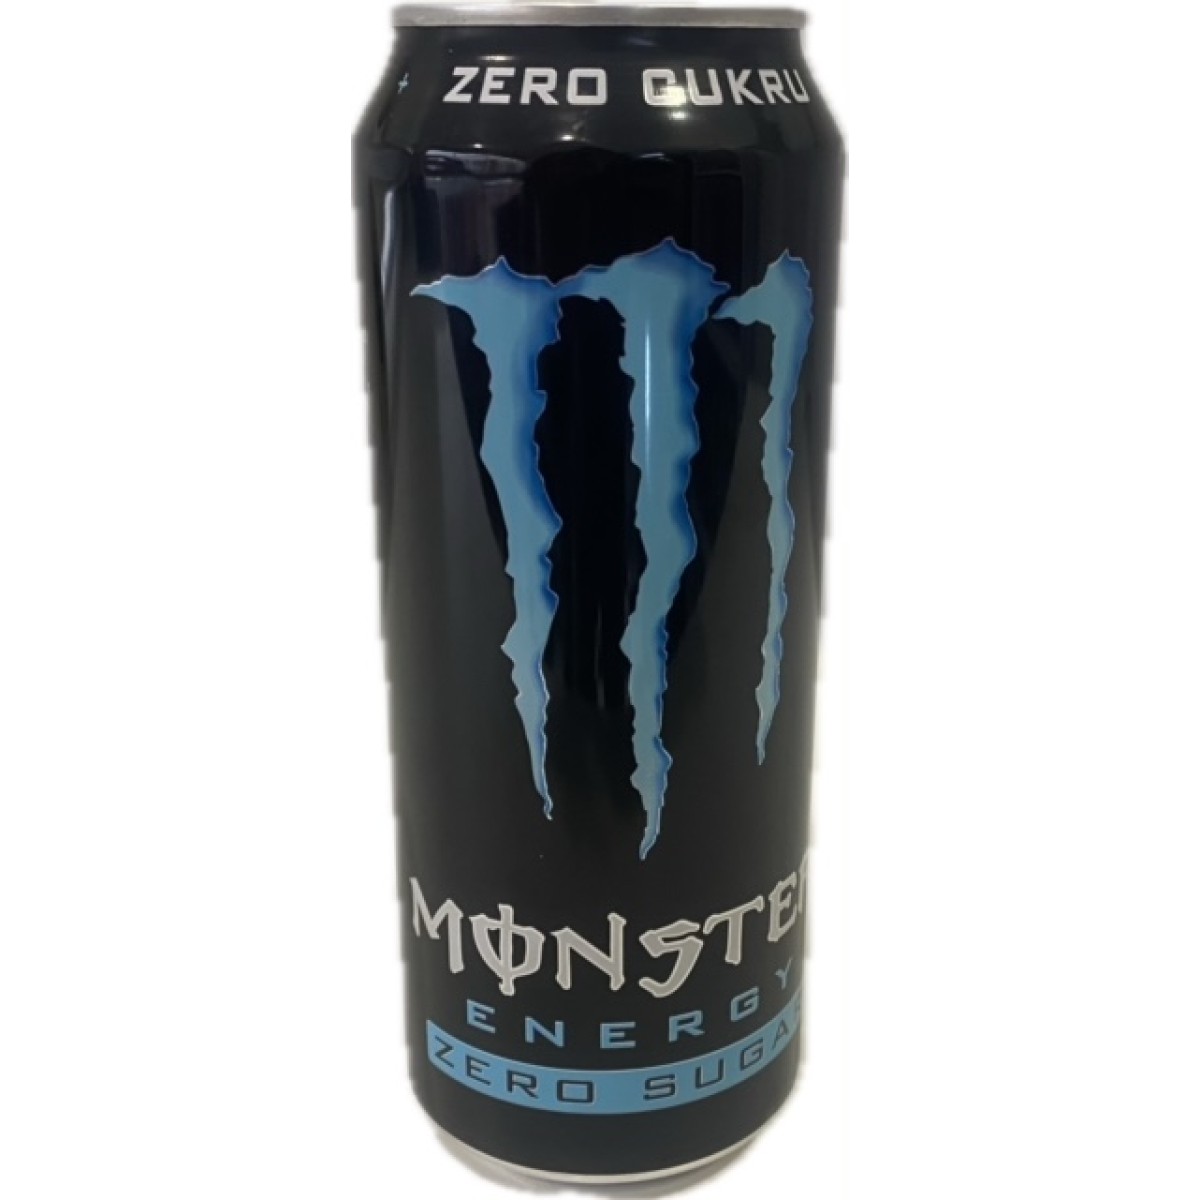 Monster zero sugar blue 500ml